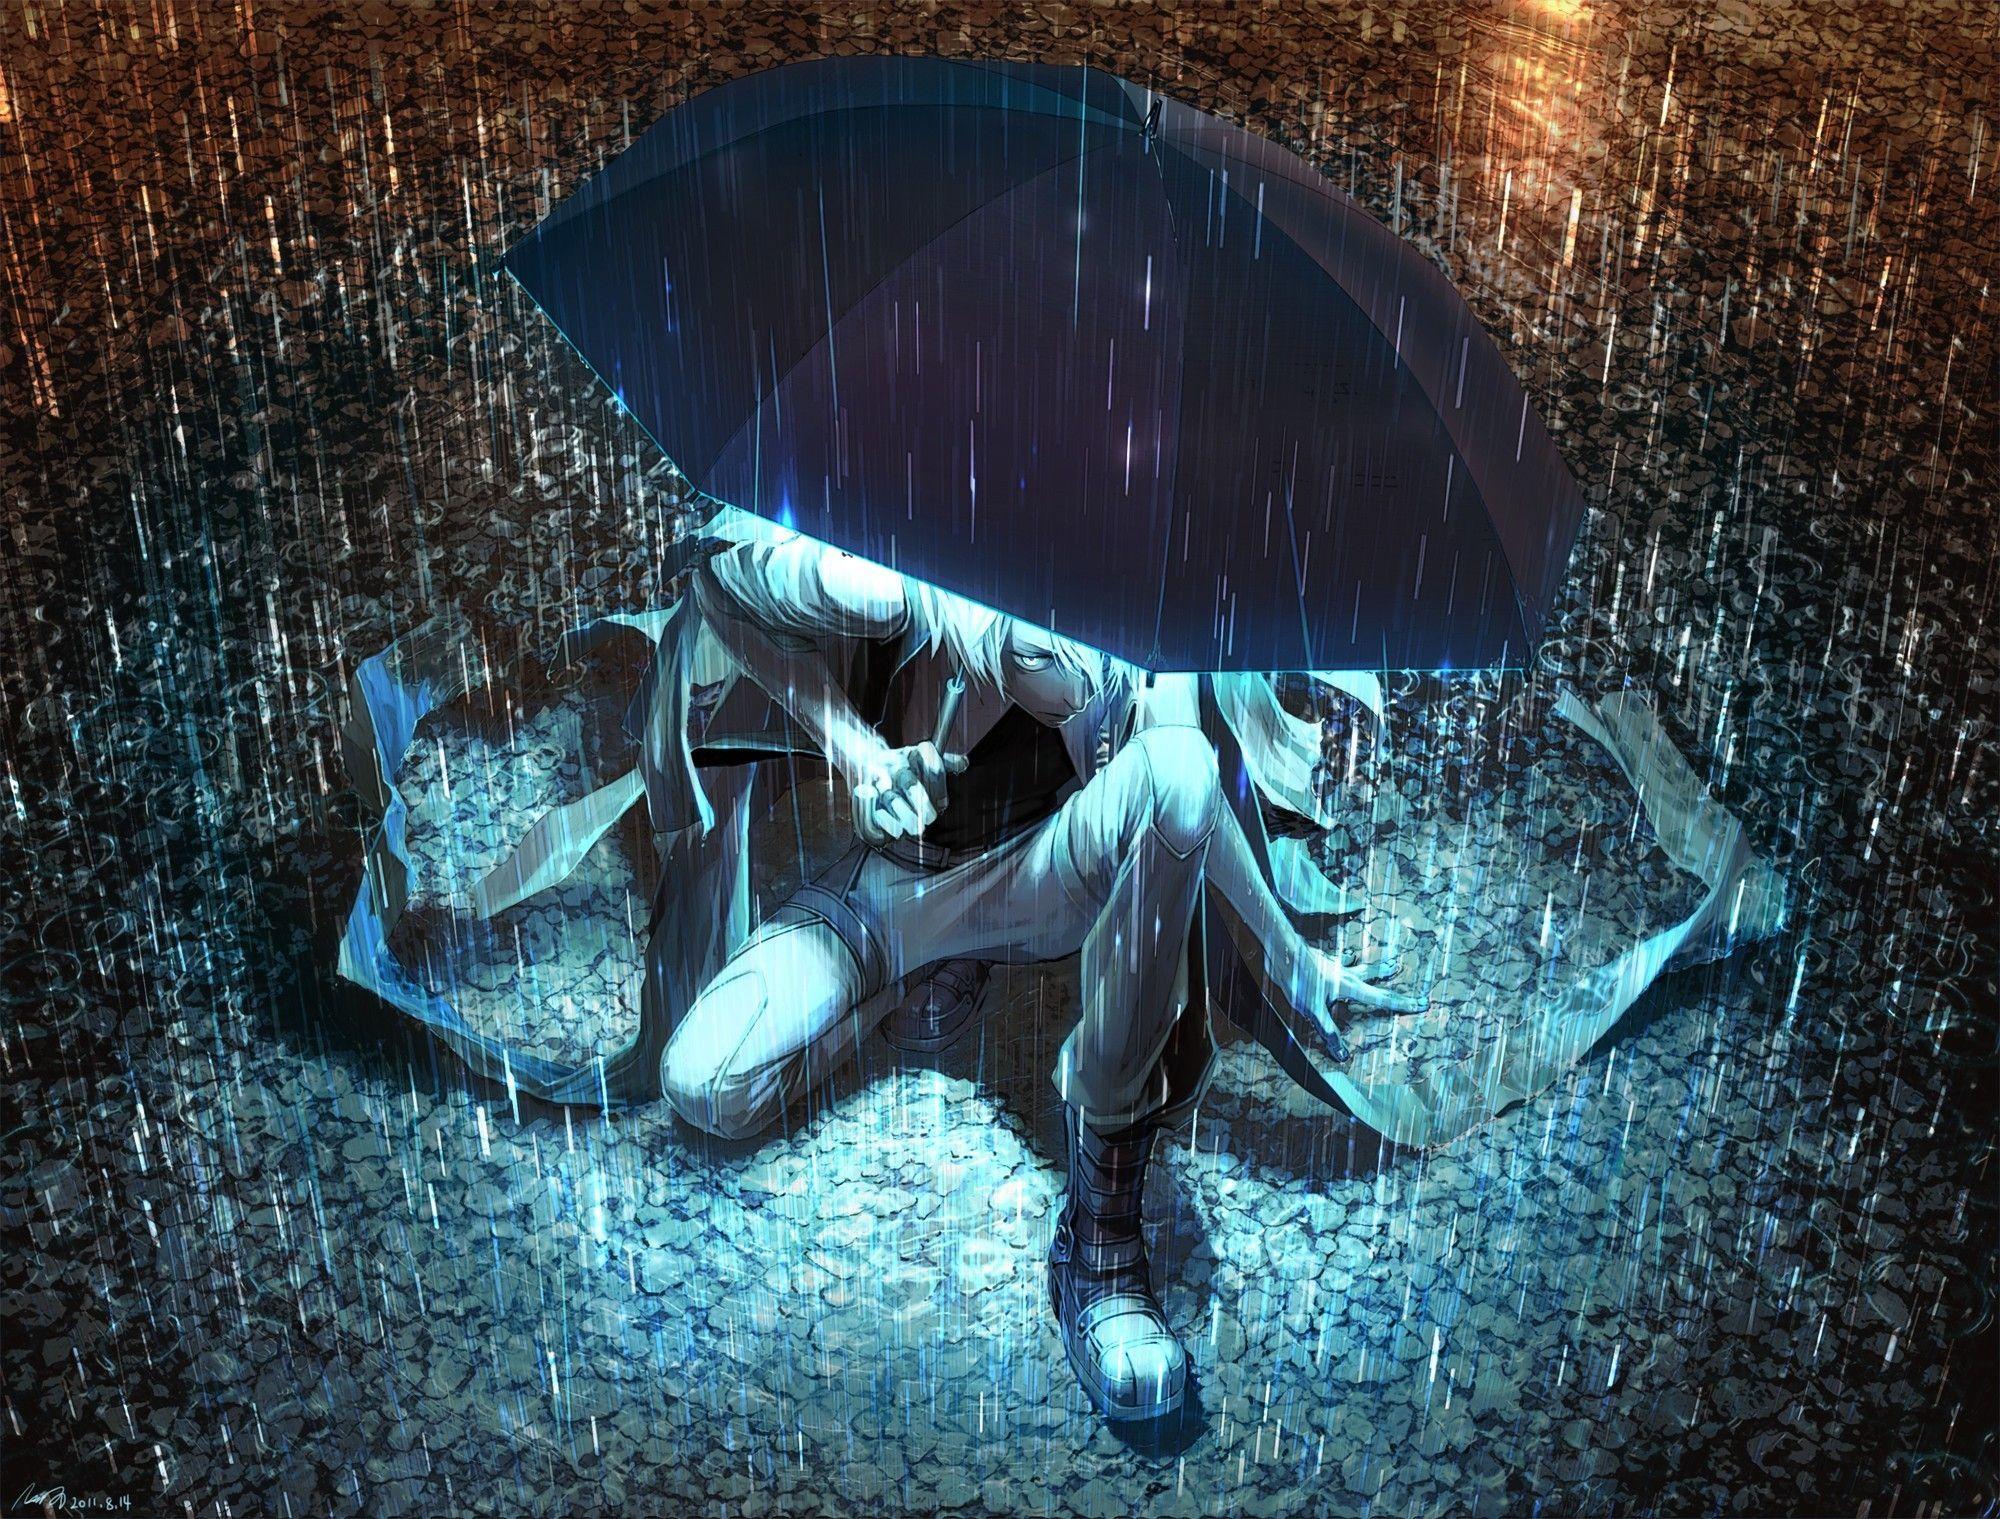 Umbrellas Anime Rain. The best wallpaper background